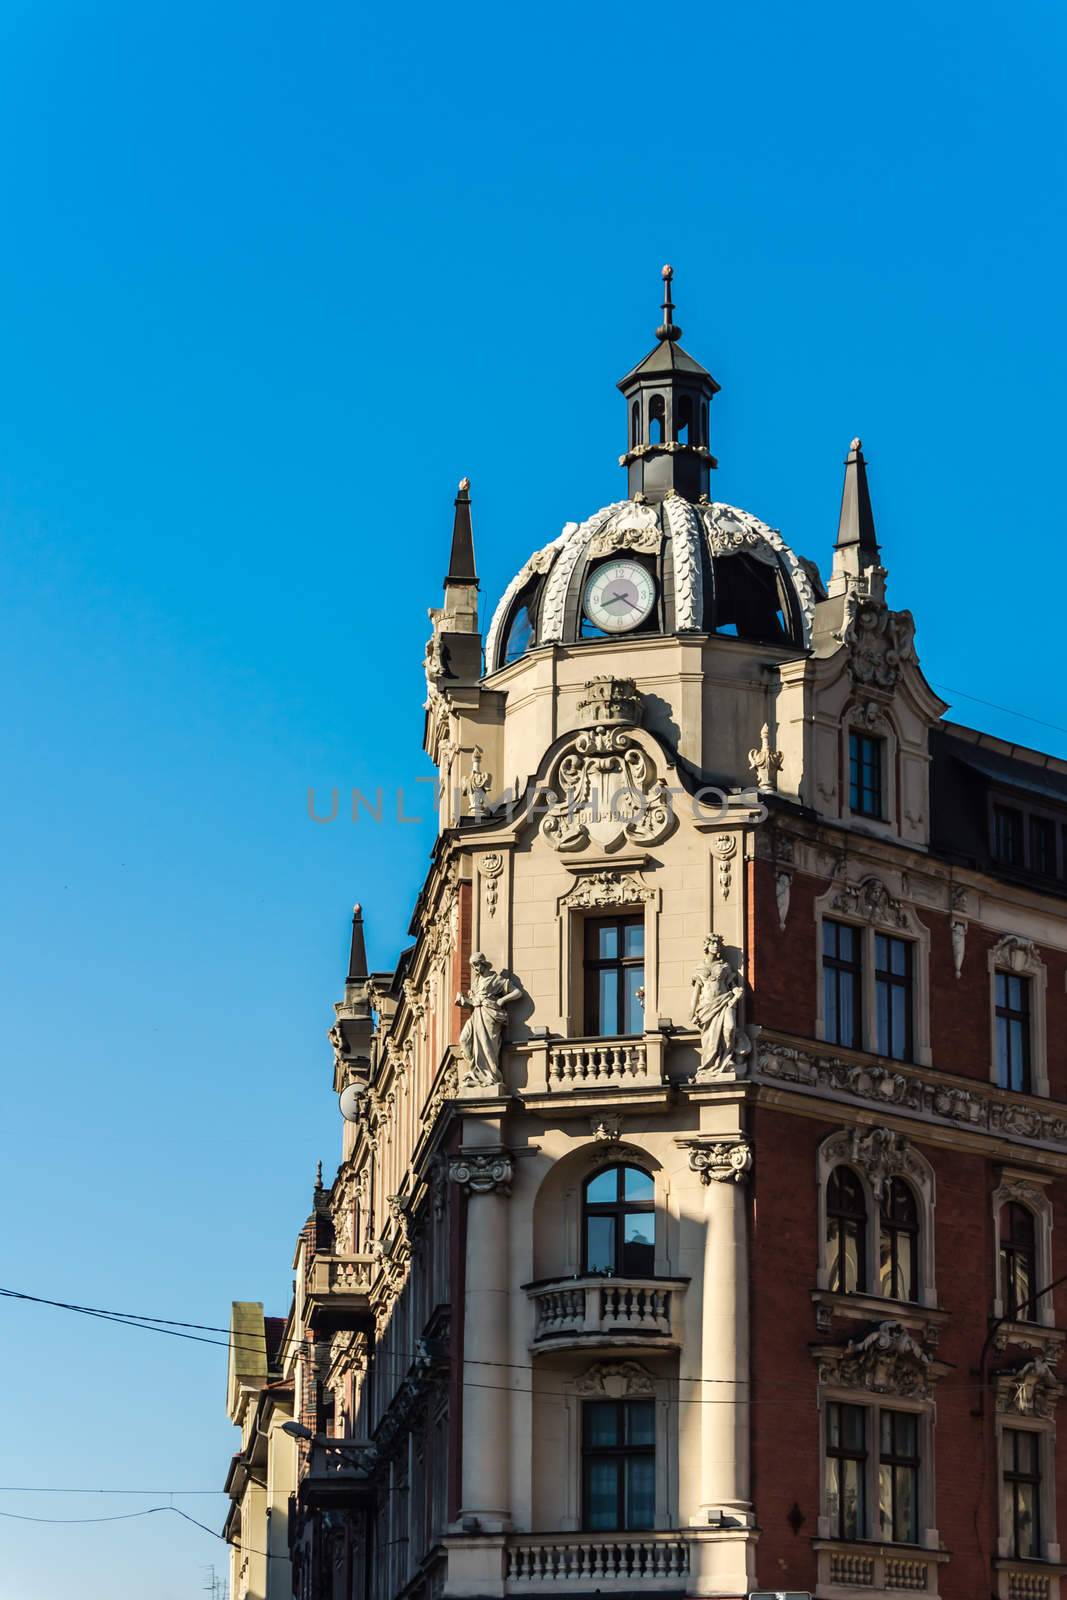 Tenement built in neo-baroque architectural style by pawel_szczepanski